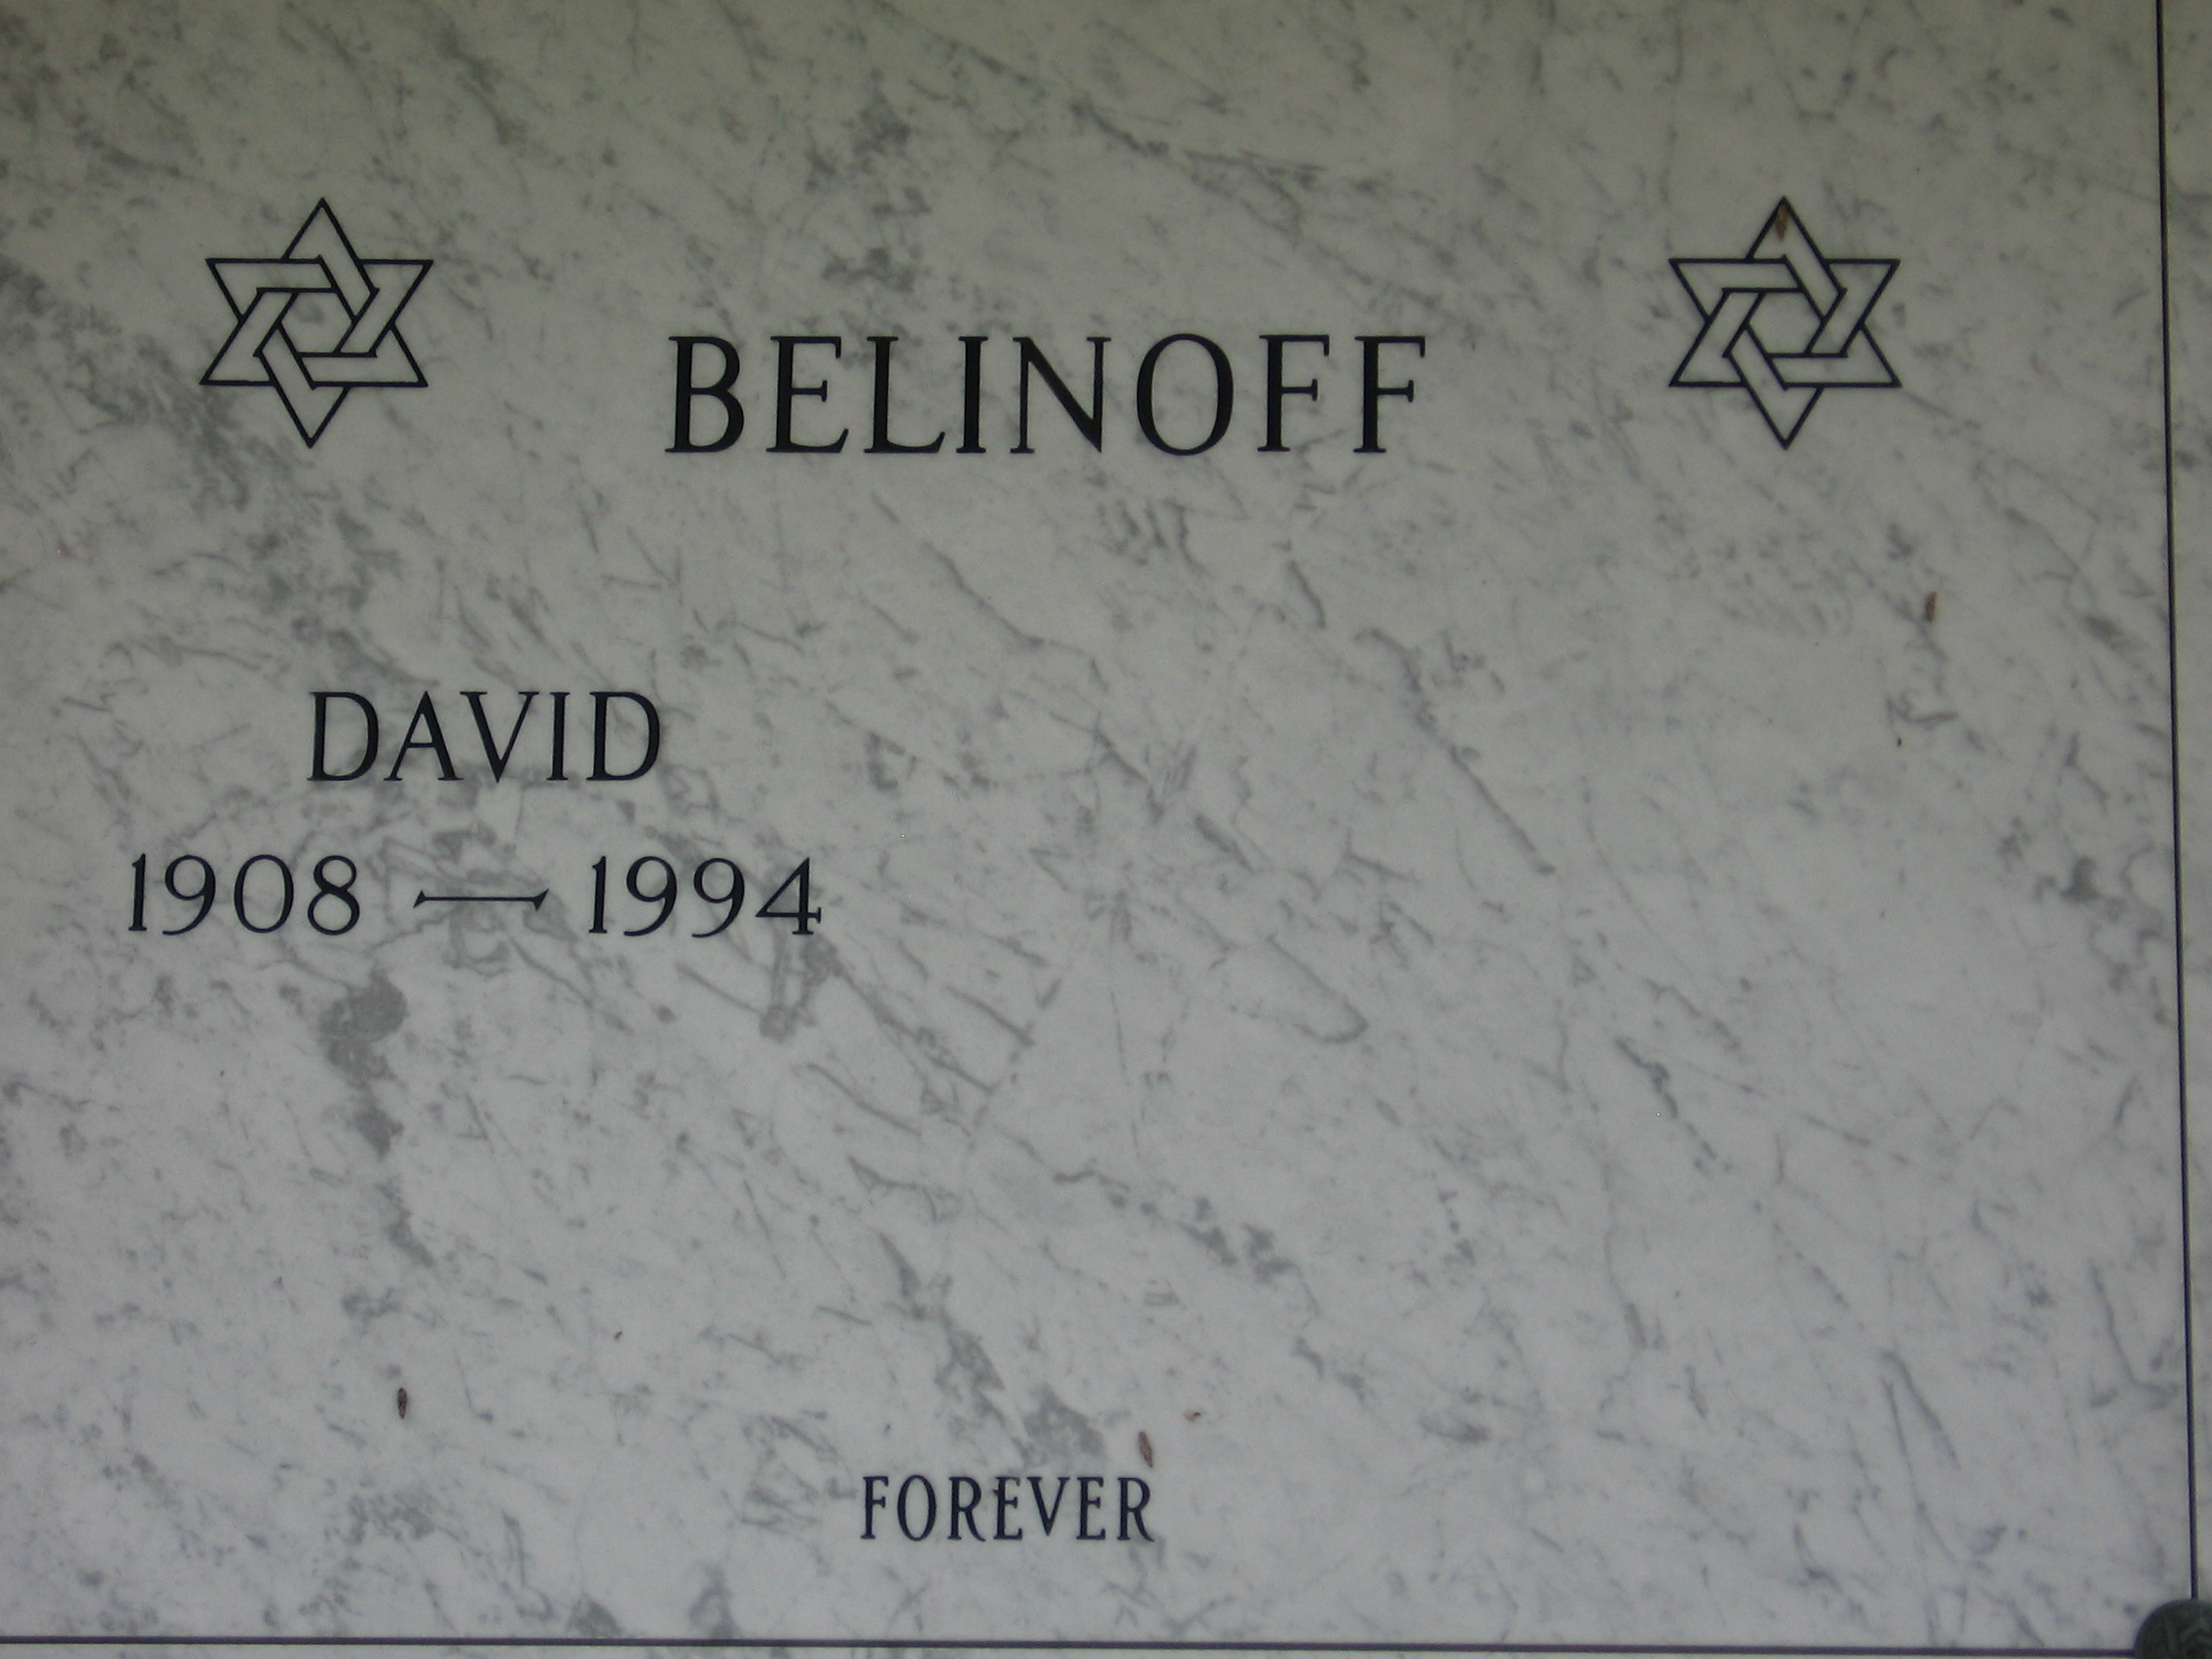 David Belinoff